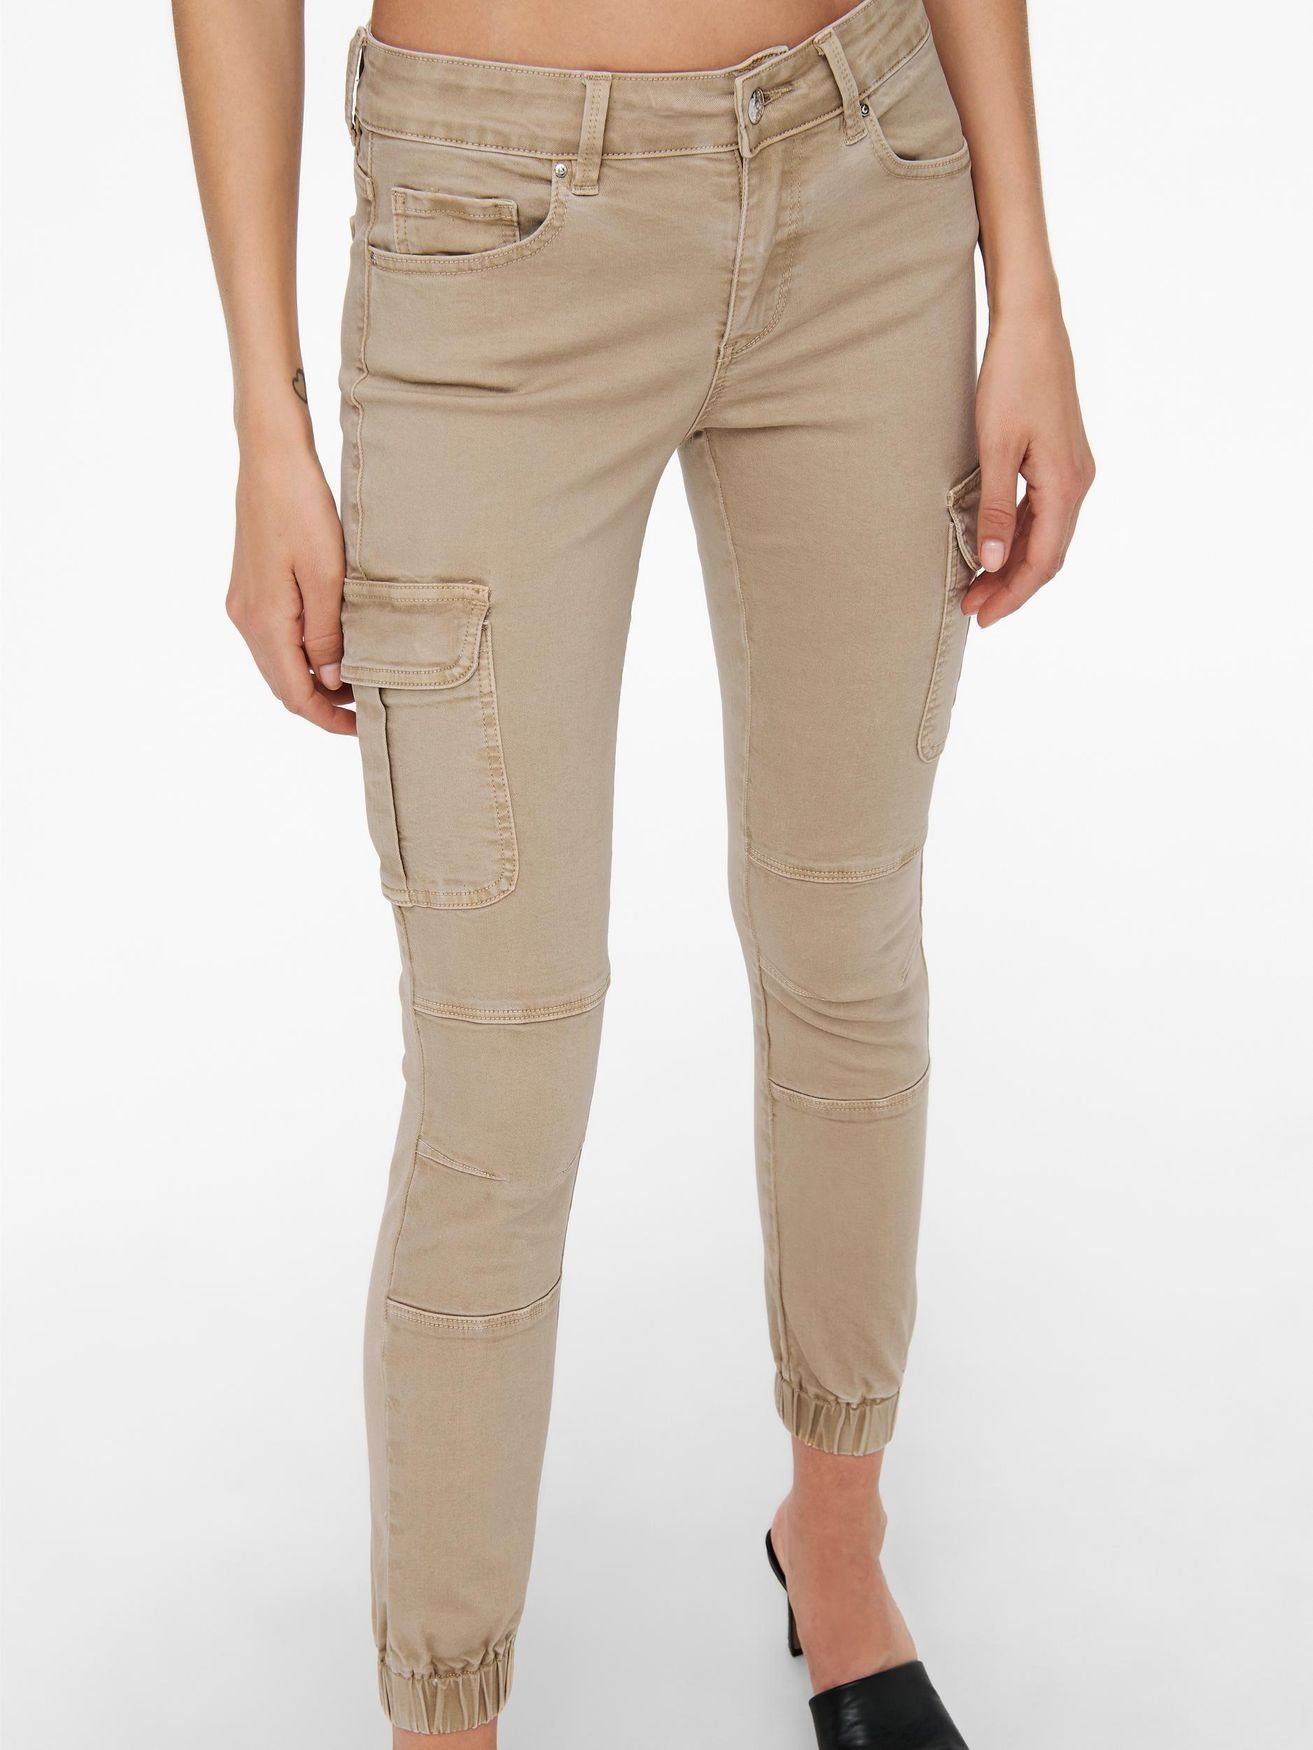 Beige Jeans Denim ONLY ONLMISSOURI Waist Slim-fit-Jeans Pants Hose 4676 Jogger Cargo in Mid